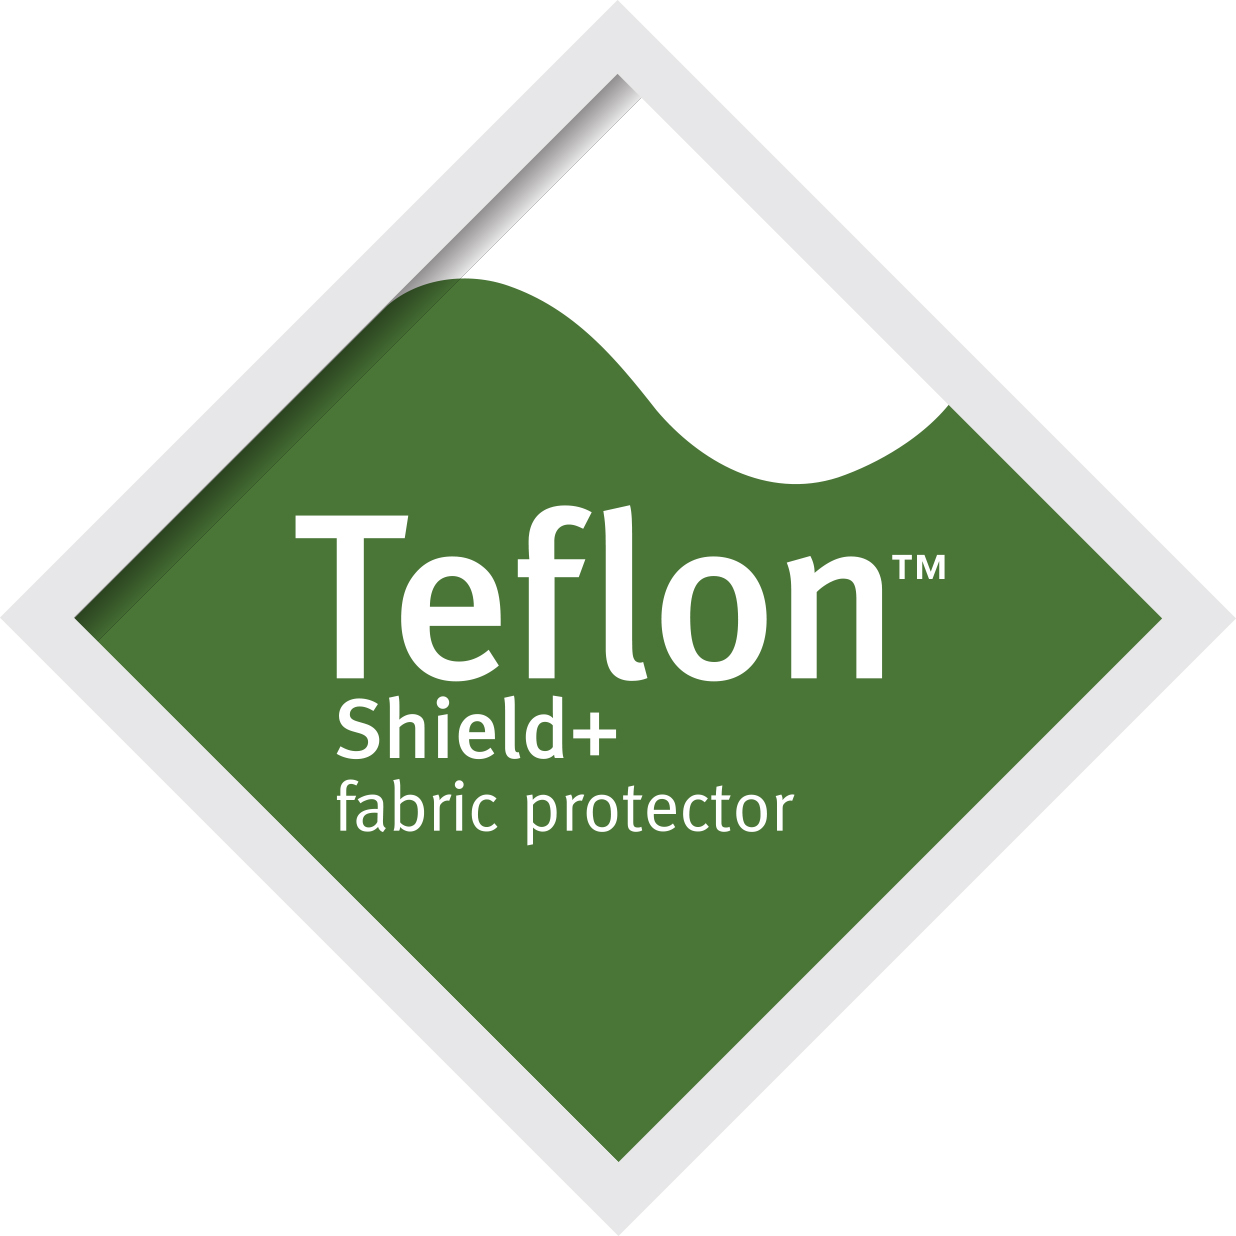 Teflon Shield+